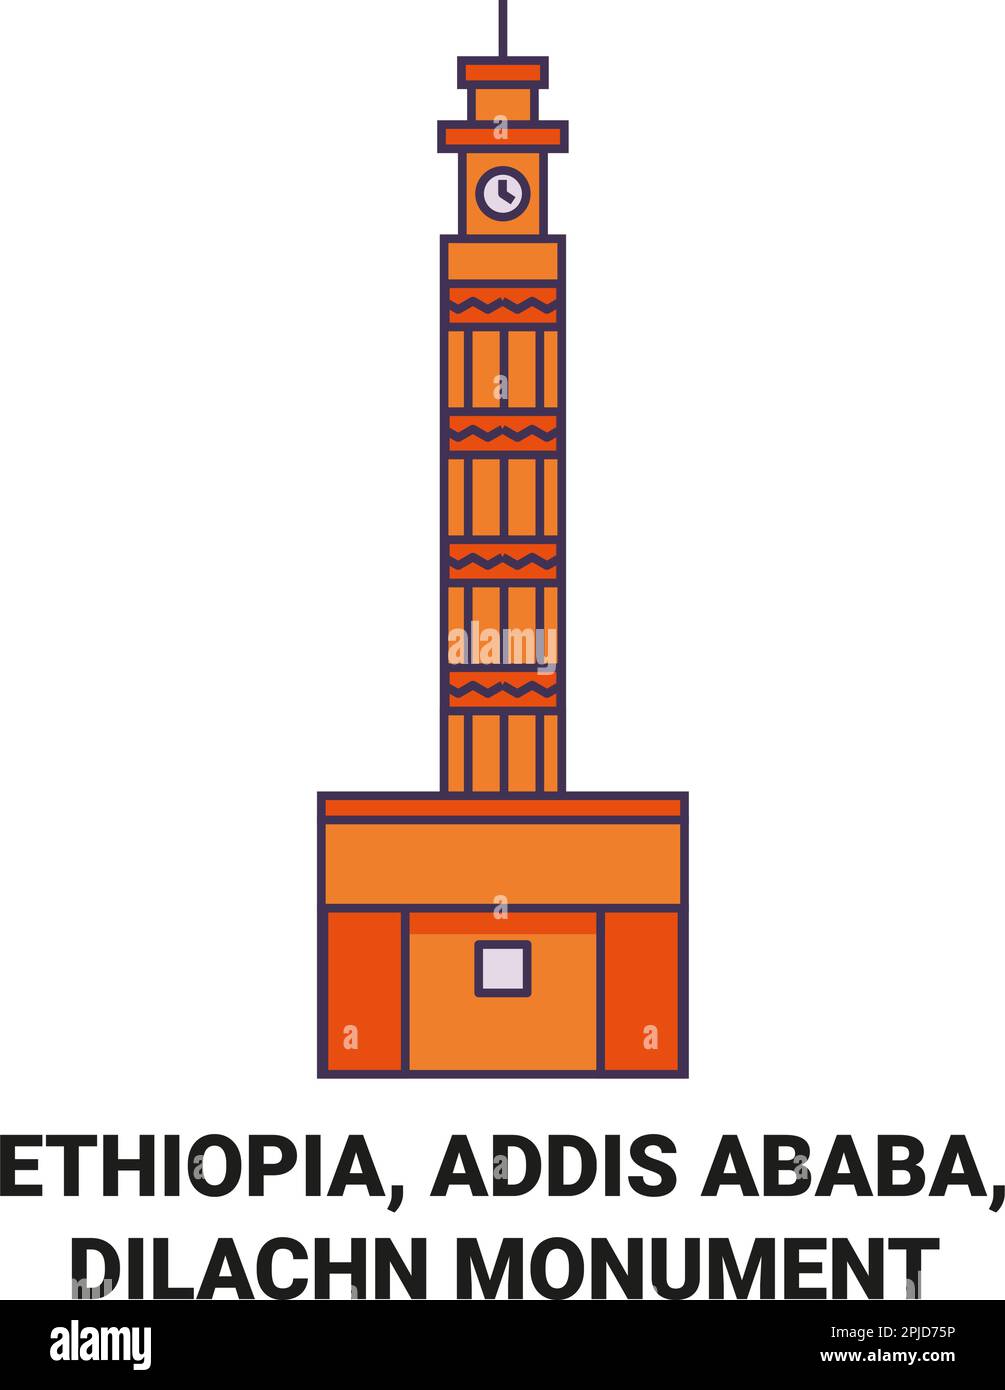 Ethiopia, Addis Ababa, Dilachn Monument travel landmark vector illustration Stock Vector